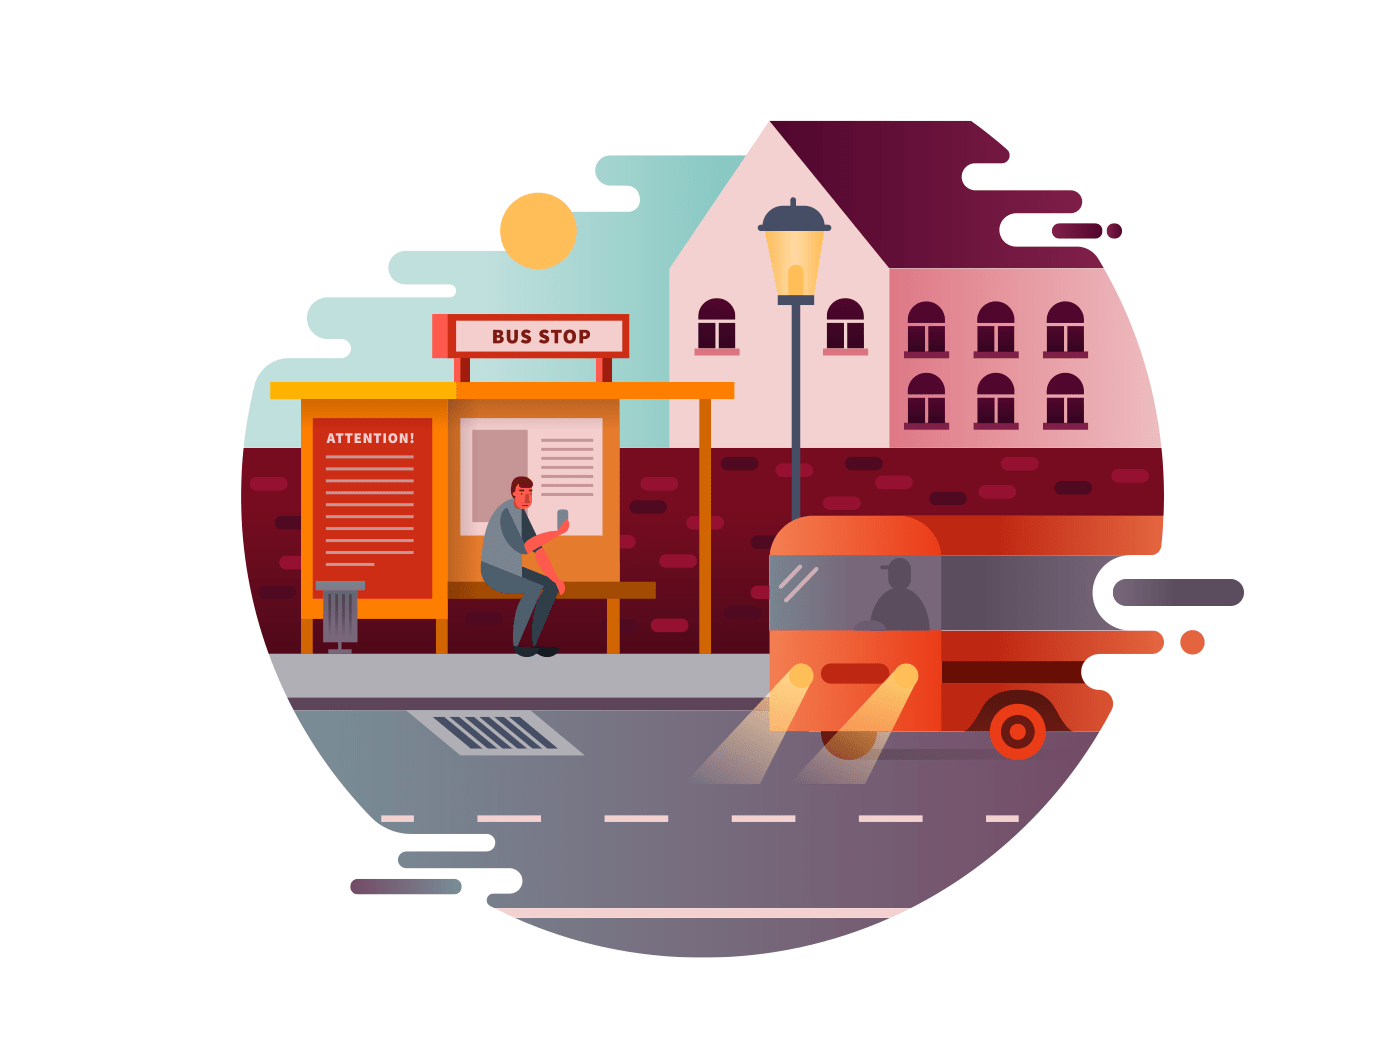 Bus stop illustration